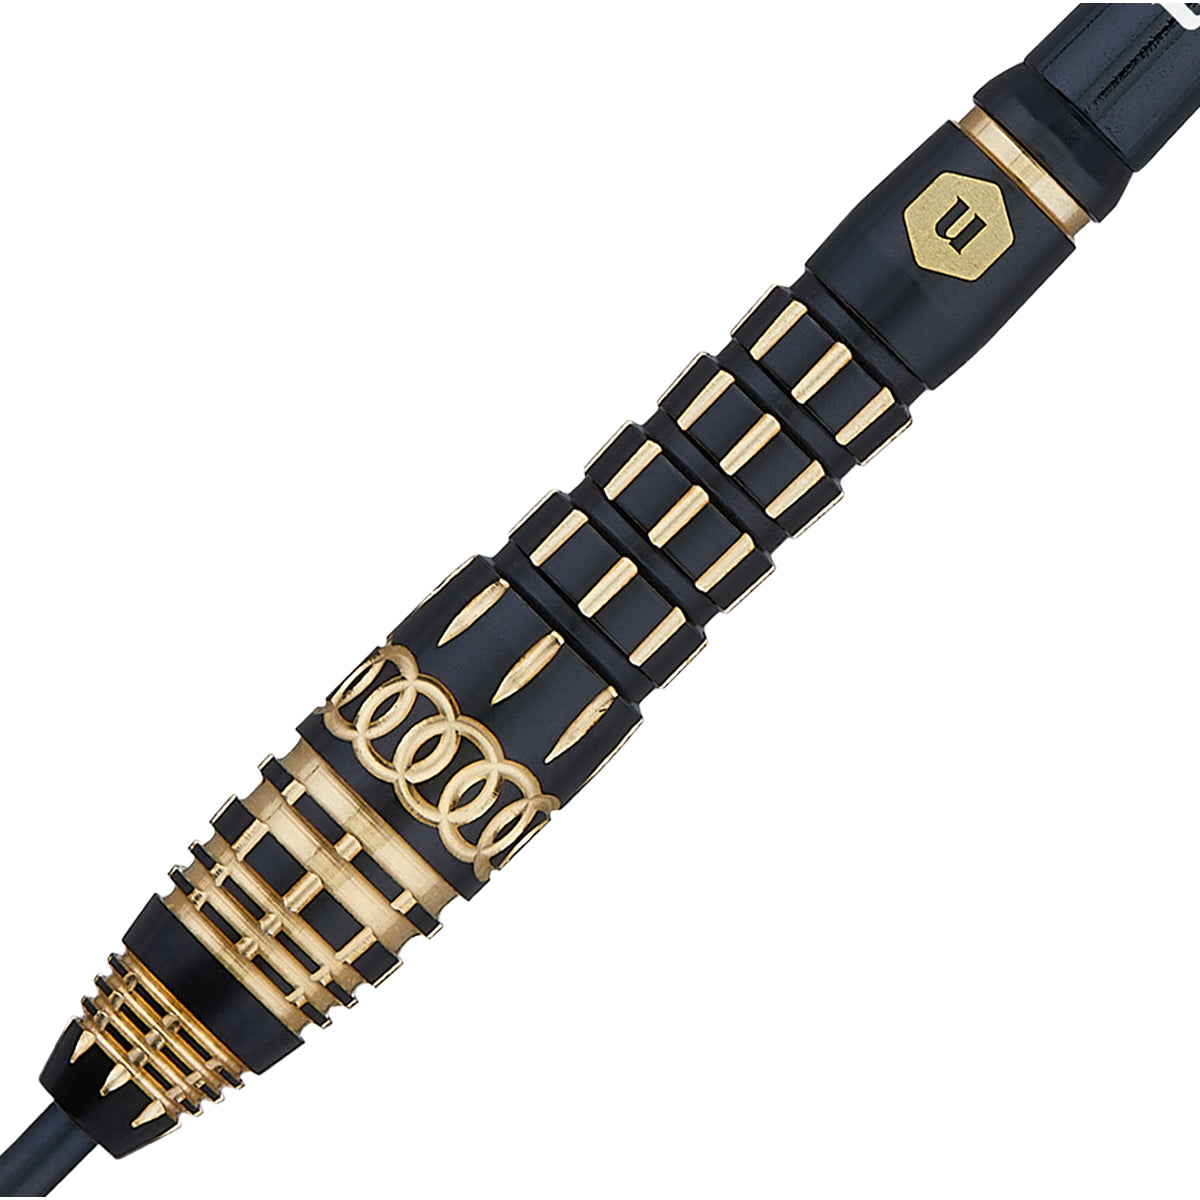 Unicorn Top Brass Darts - Steel Tip - Style 4 - Black & Gold